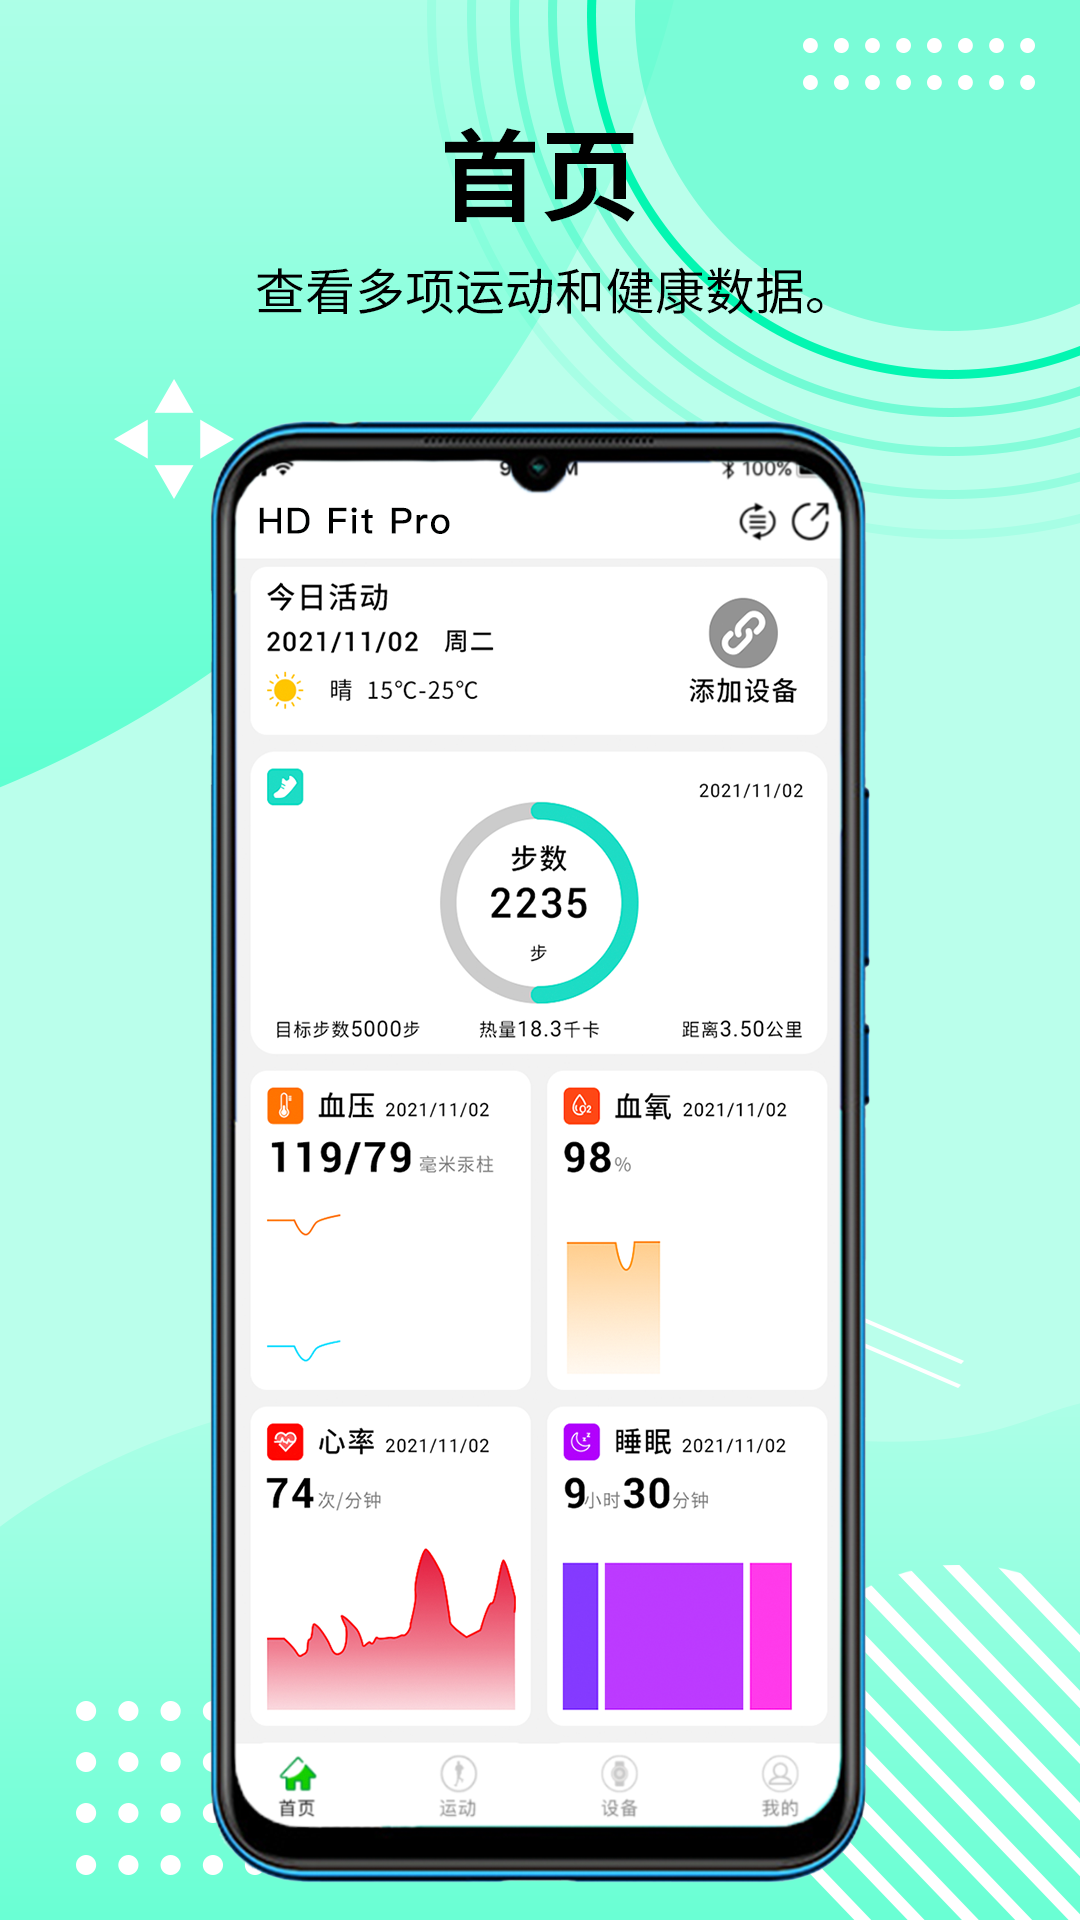 HD Fit Pro智能健康 截图2